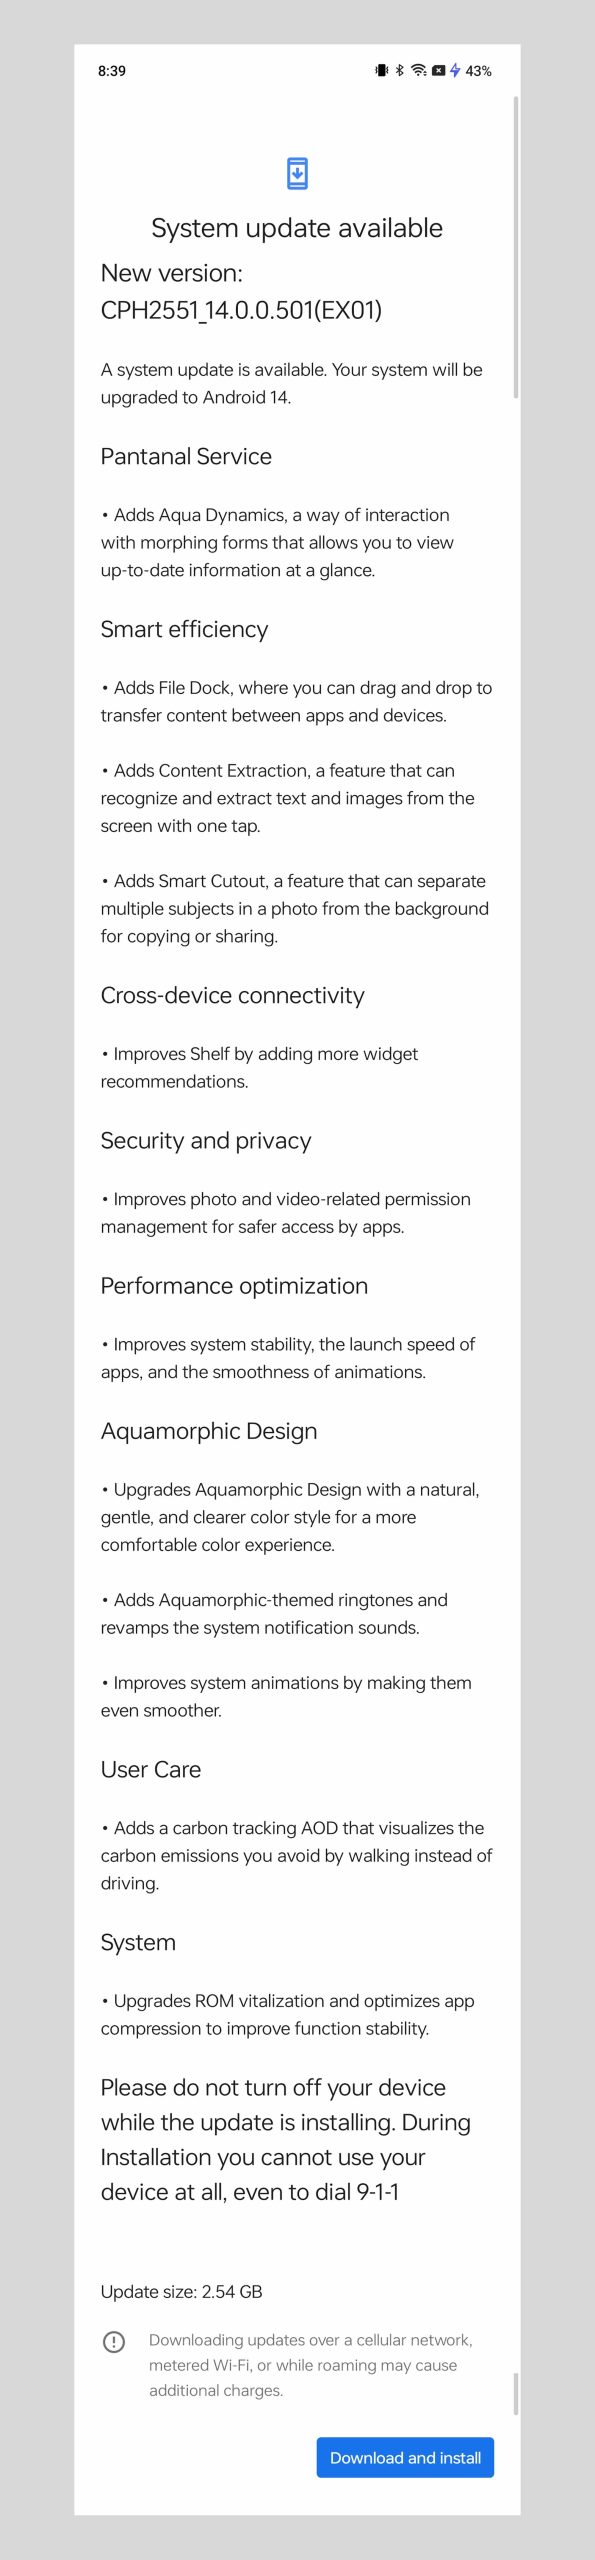 OnePlus Open سرانجام به‌روزرسانی عظیم اندروید ۱۴ را در ایالات متحده دریافت کرد